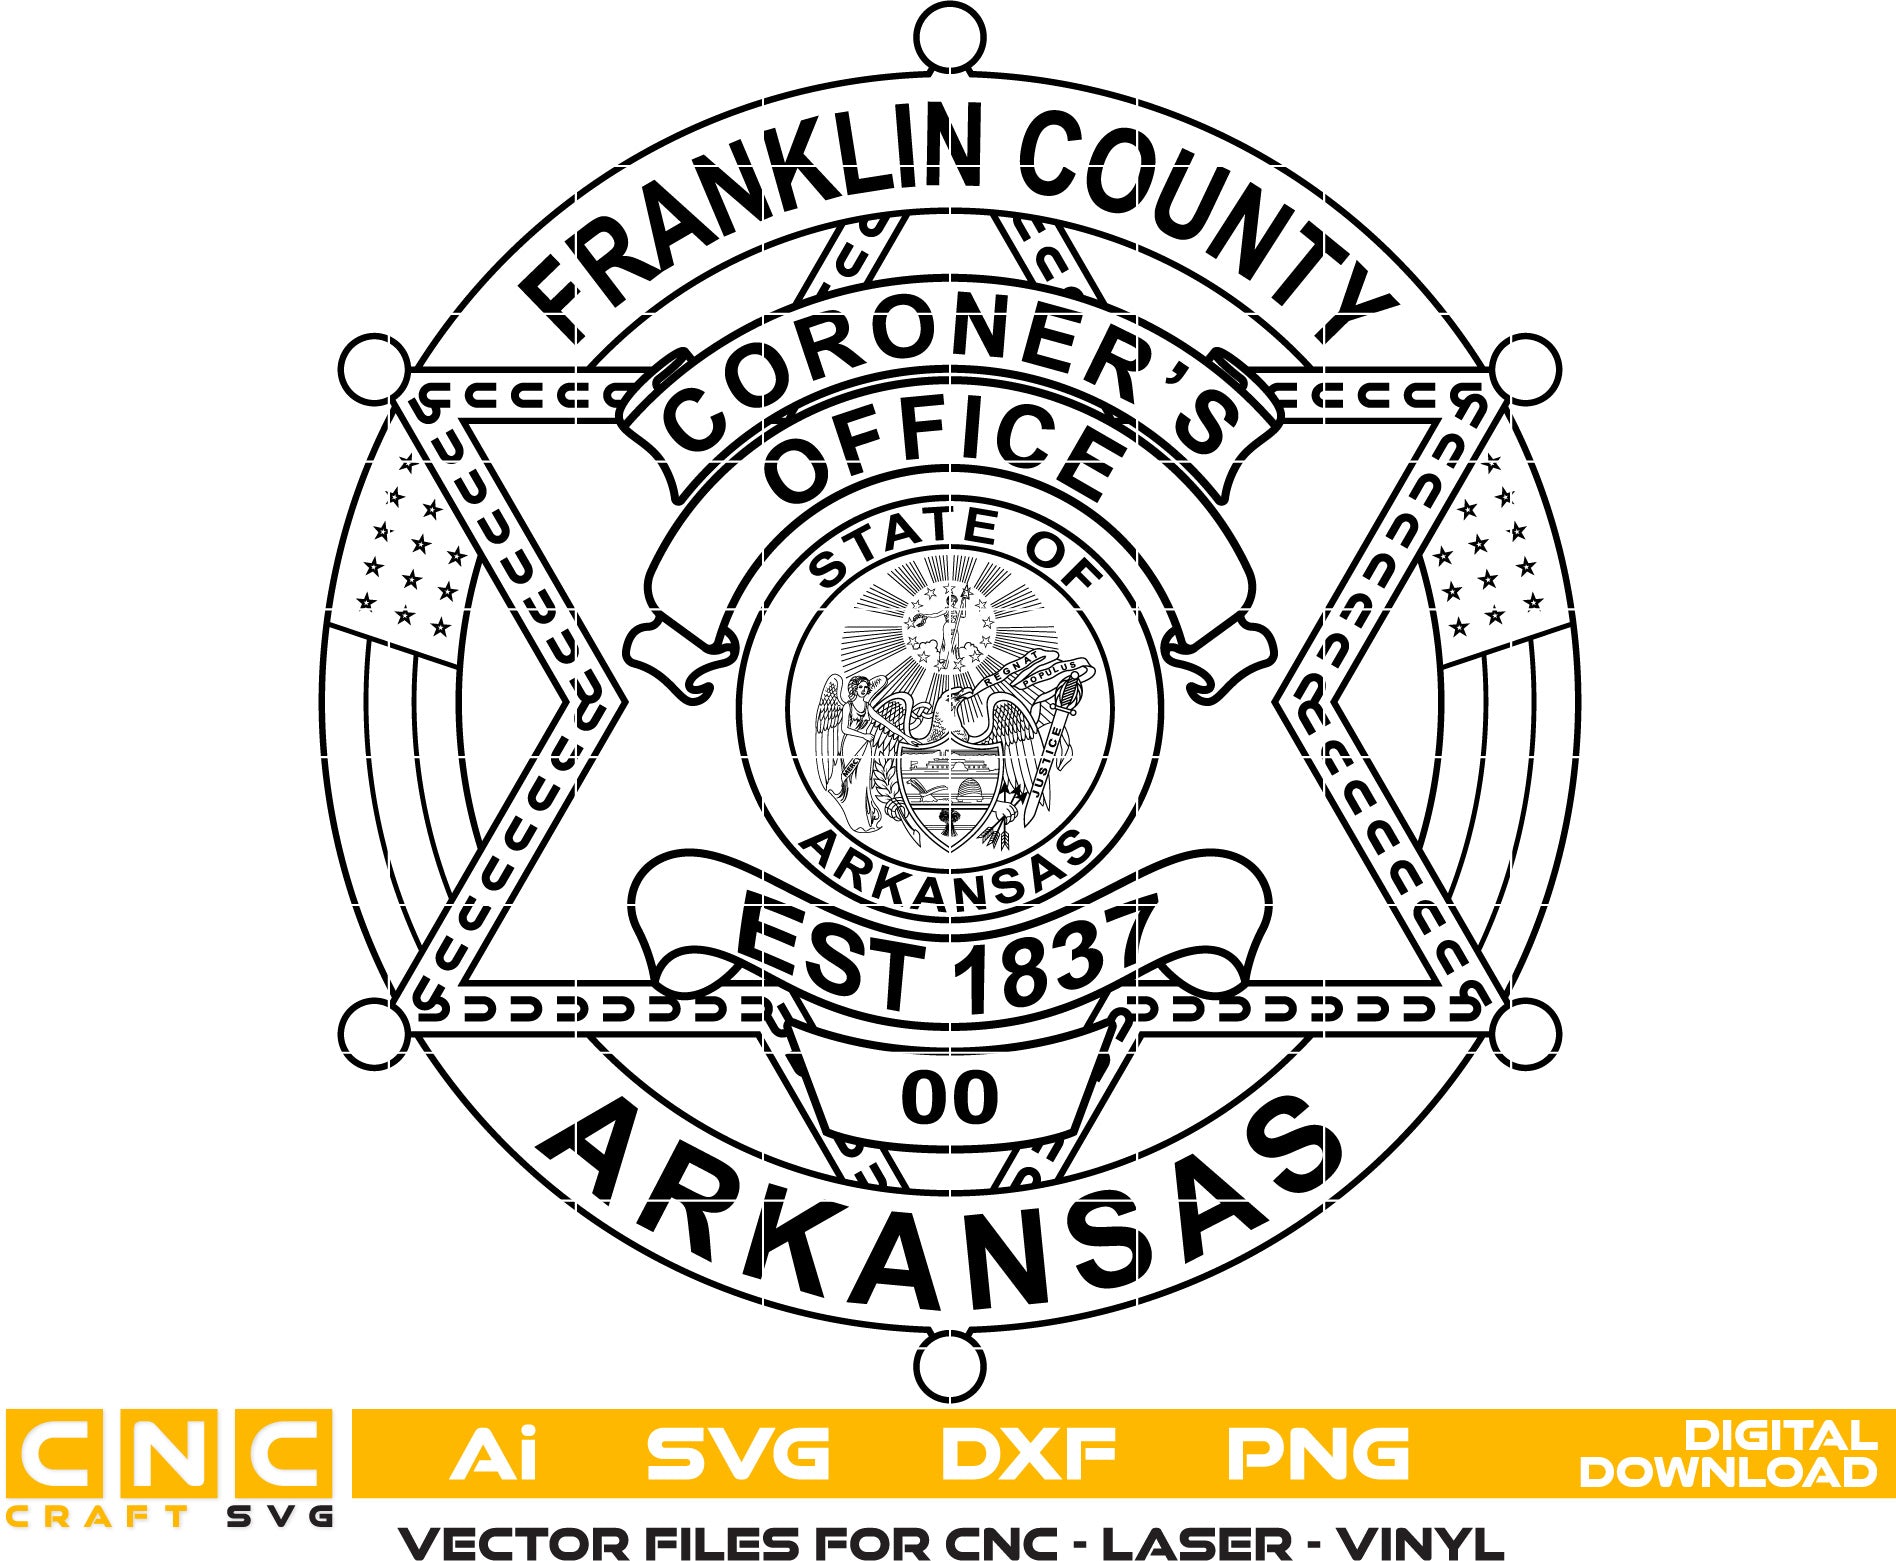 Arkansas,Franklin County Coroners Office Badge Vectro Art